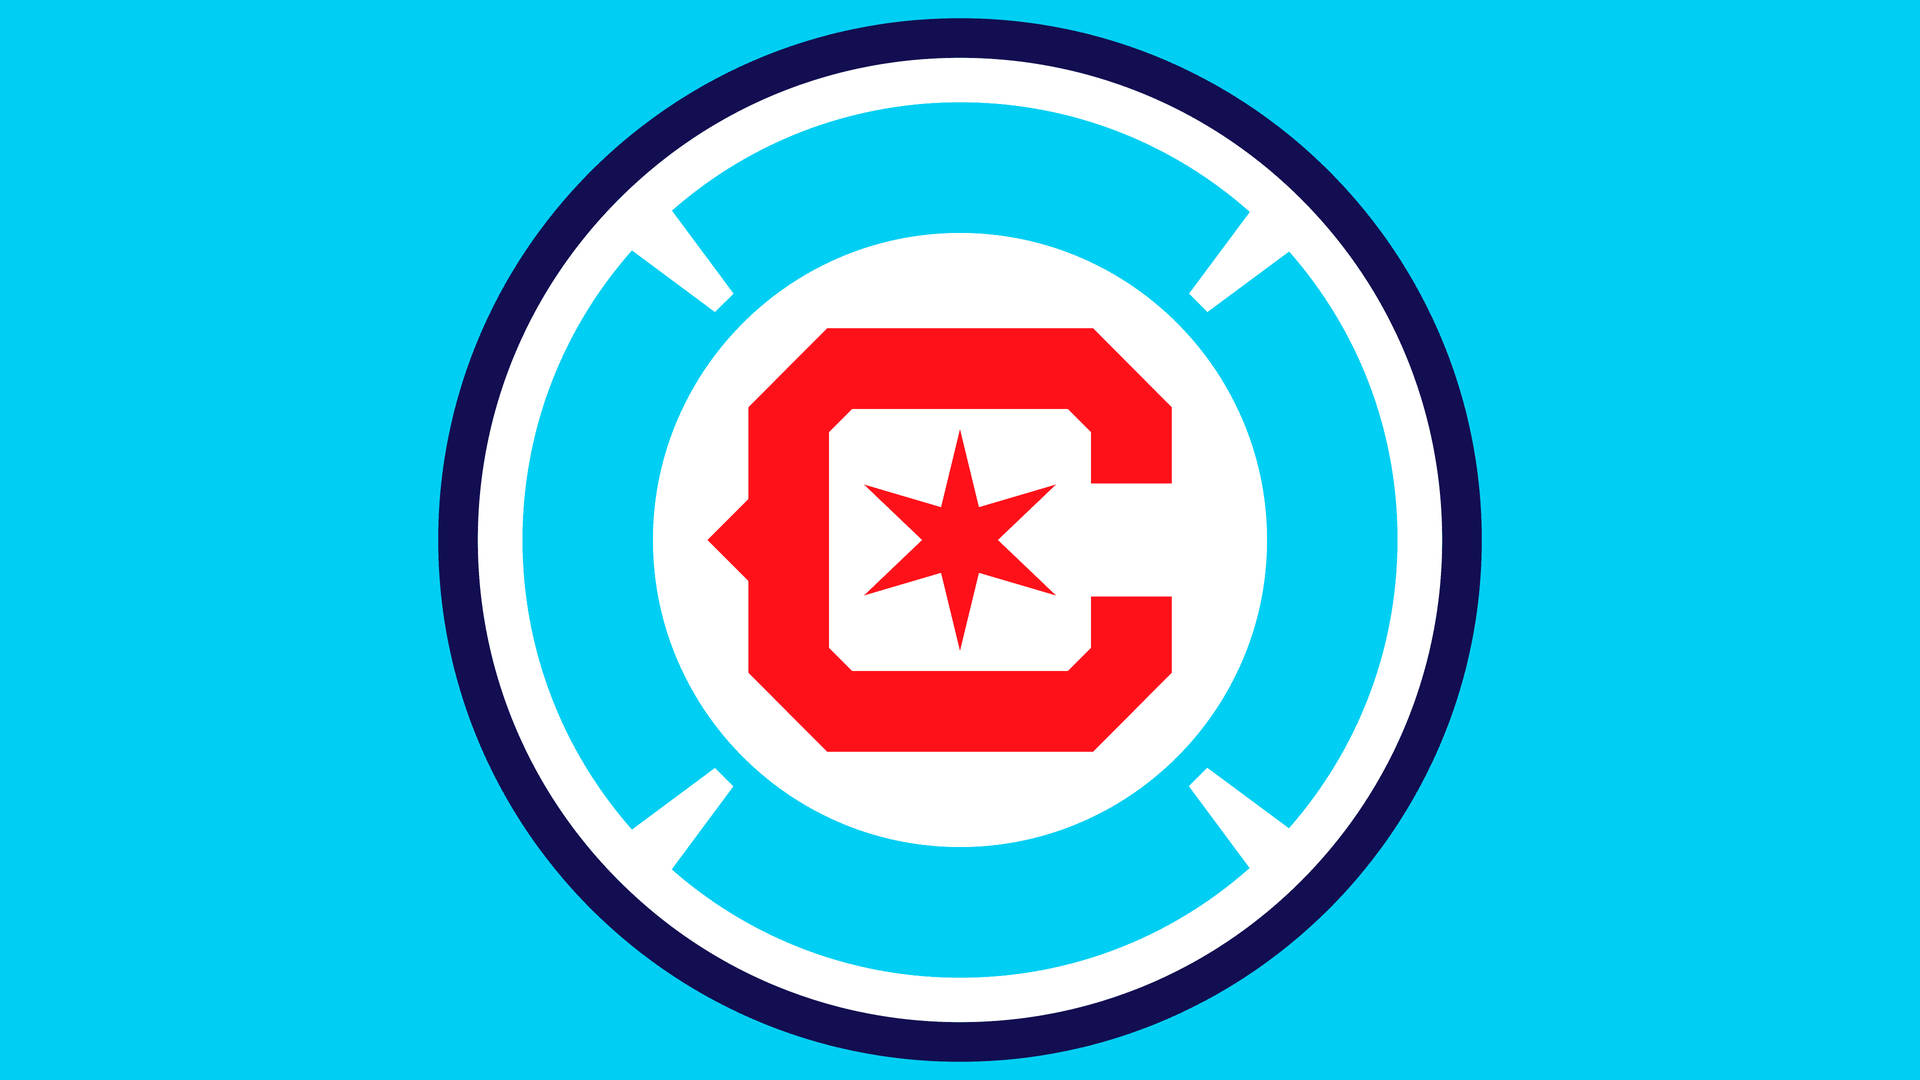 Chicago Fire FC Squad Logo Wallpaper